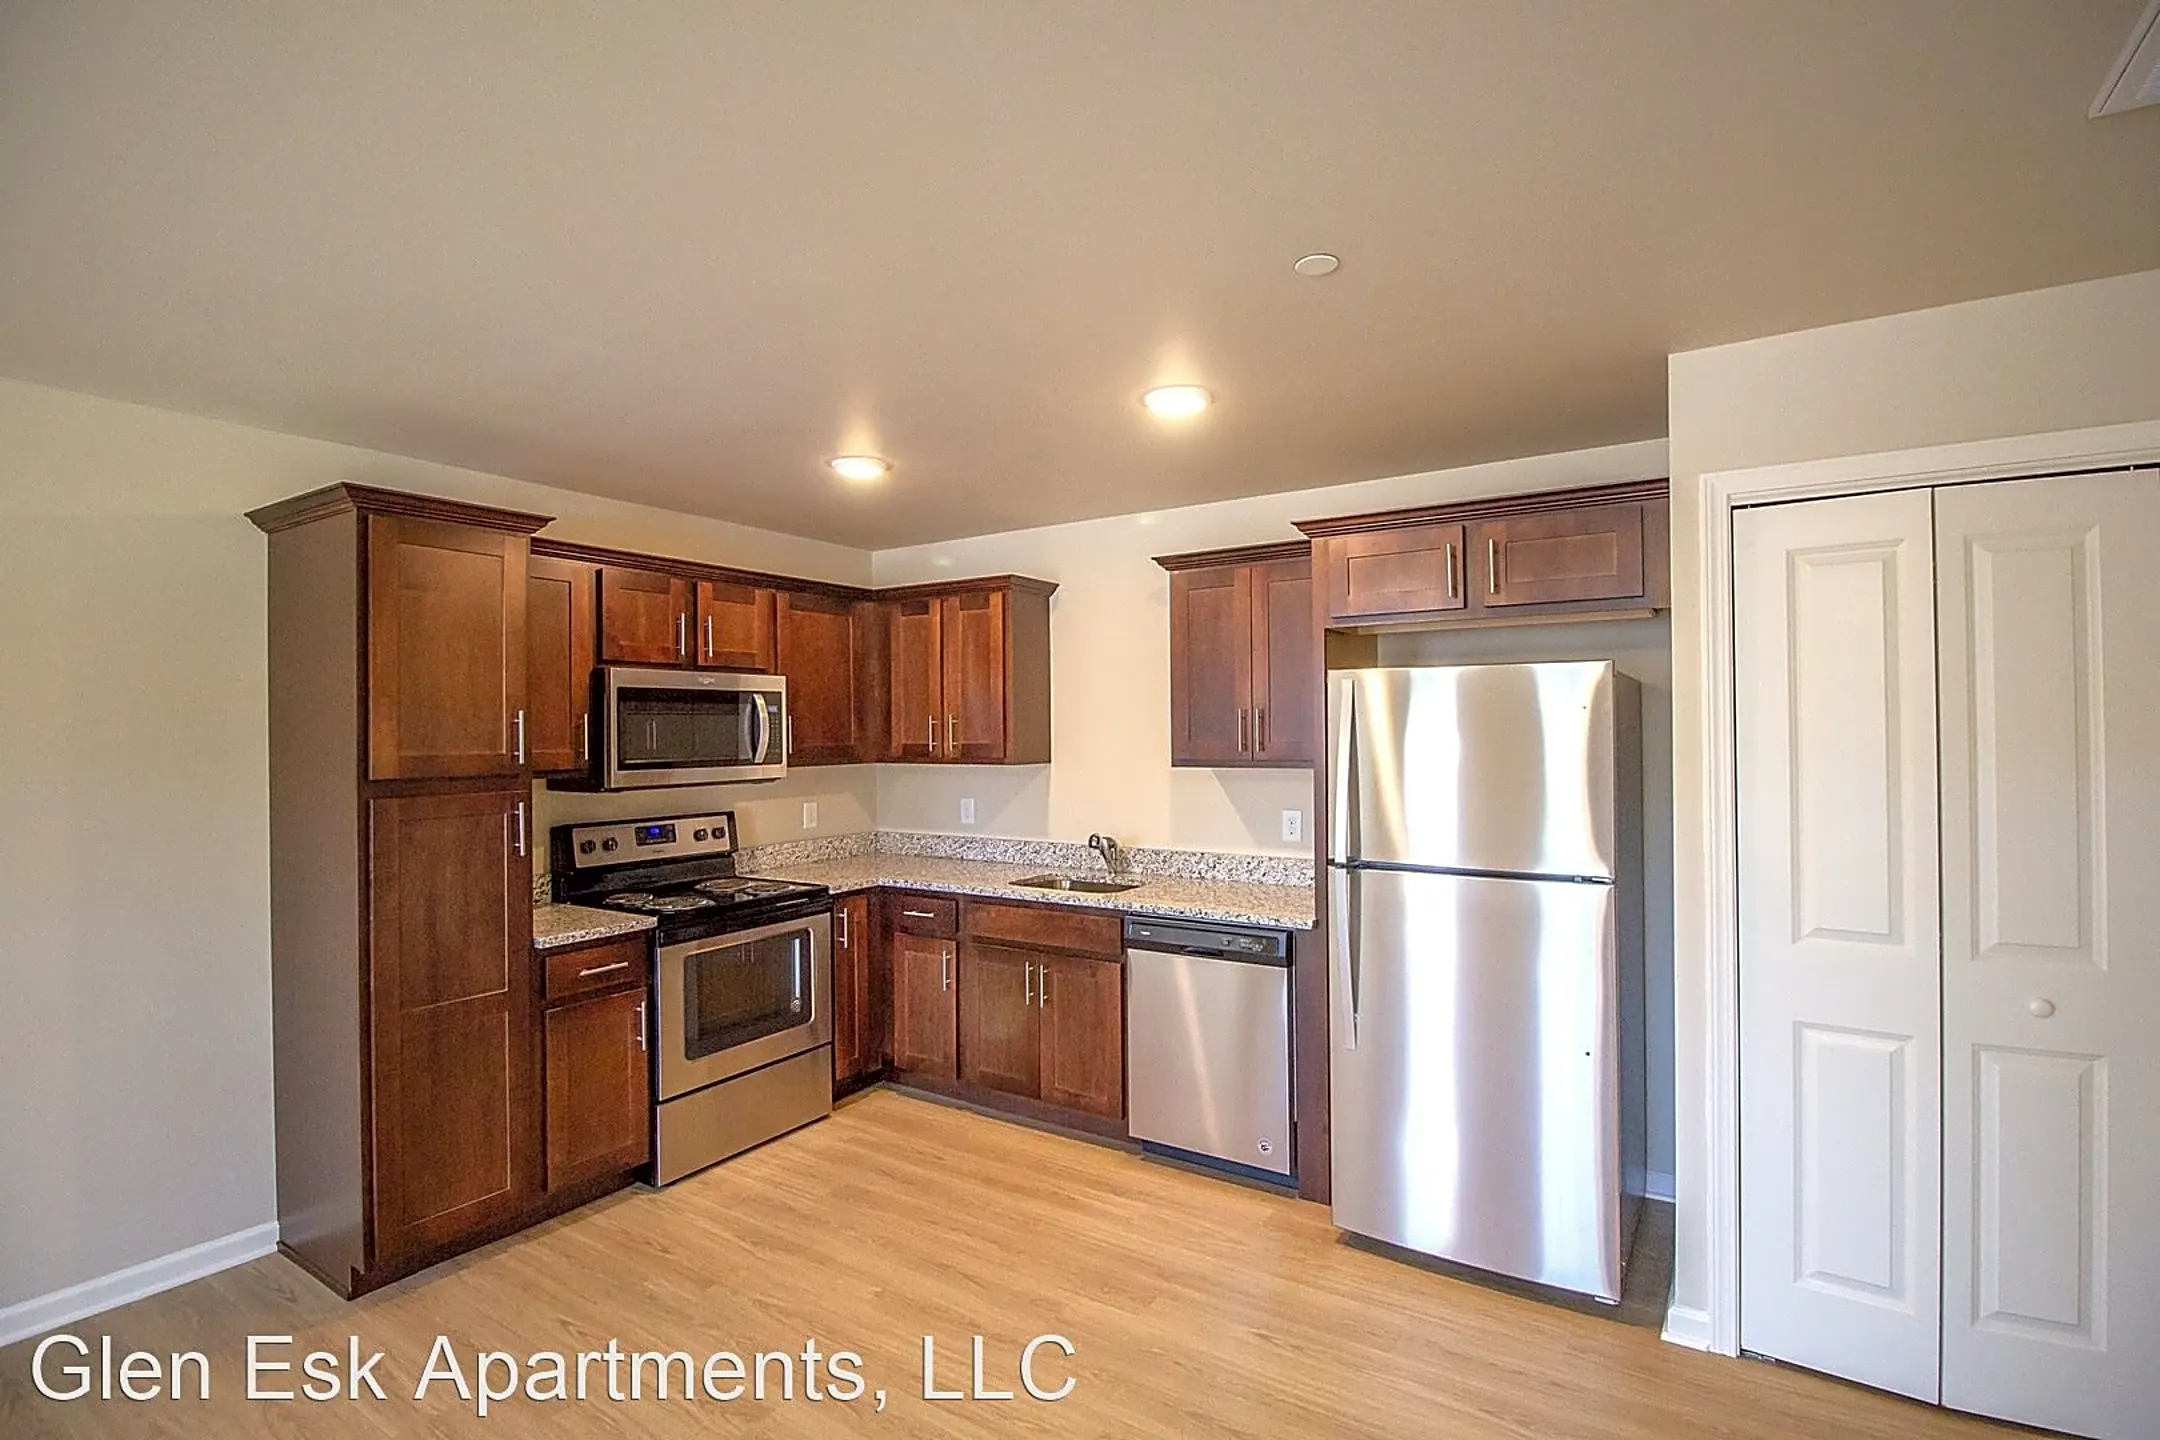 Kitchen - Glen Esk Apartments - Glenville, NY